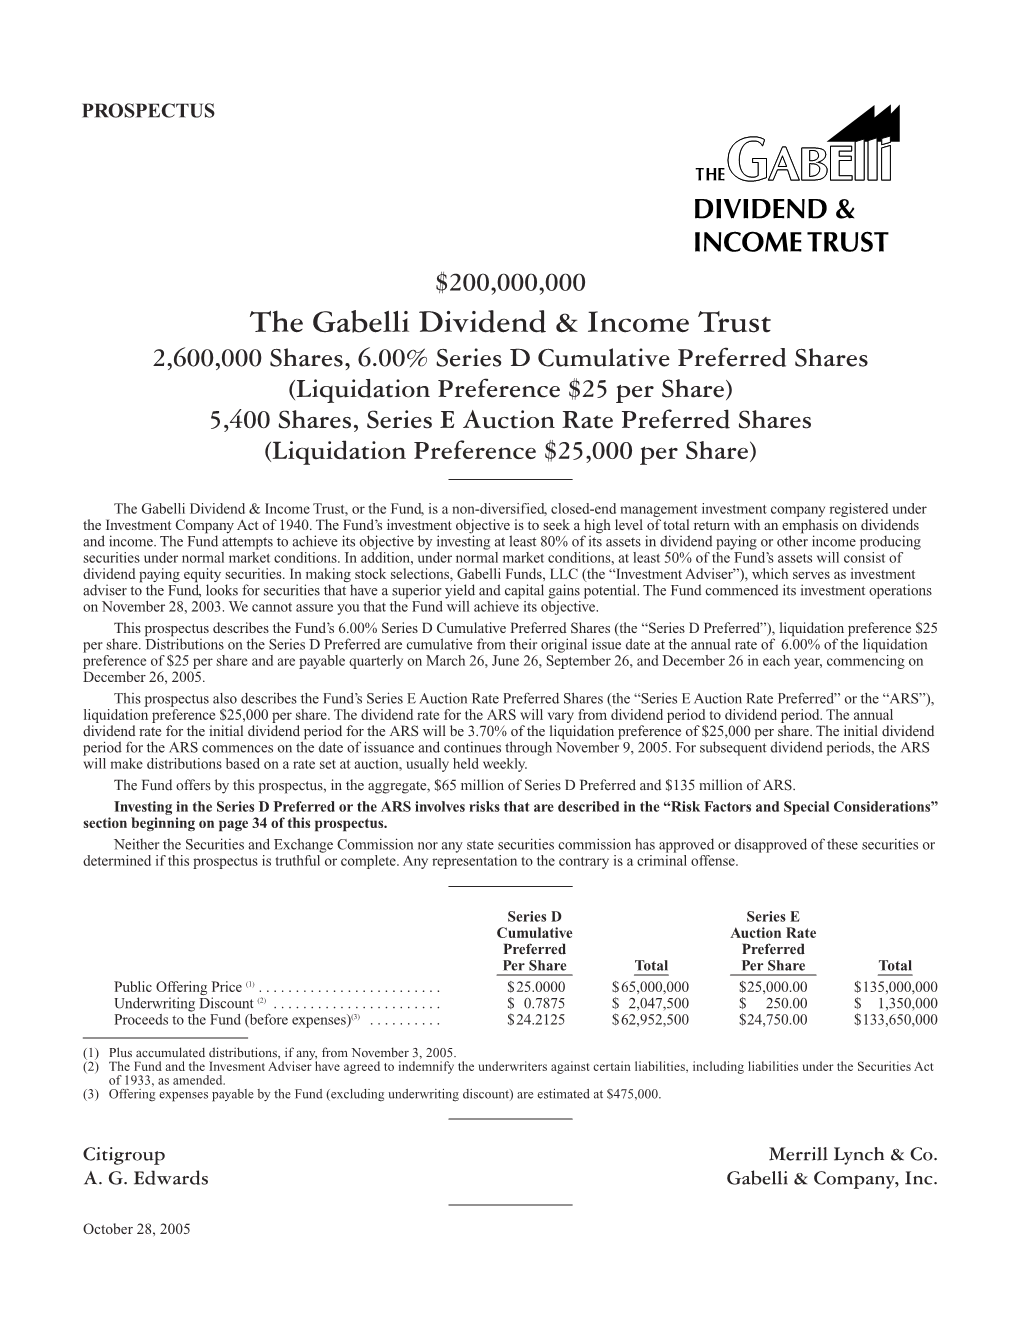 The Gabelli Dividend & Income Trust